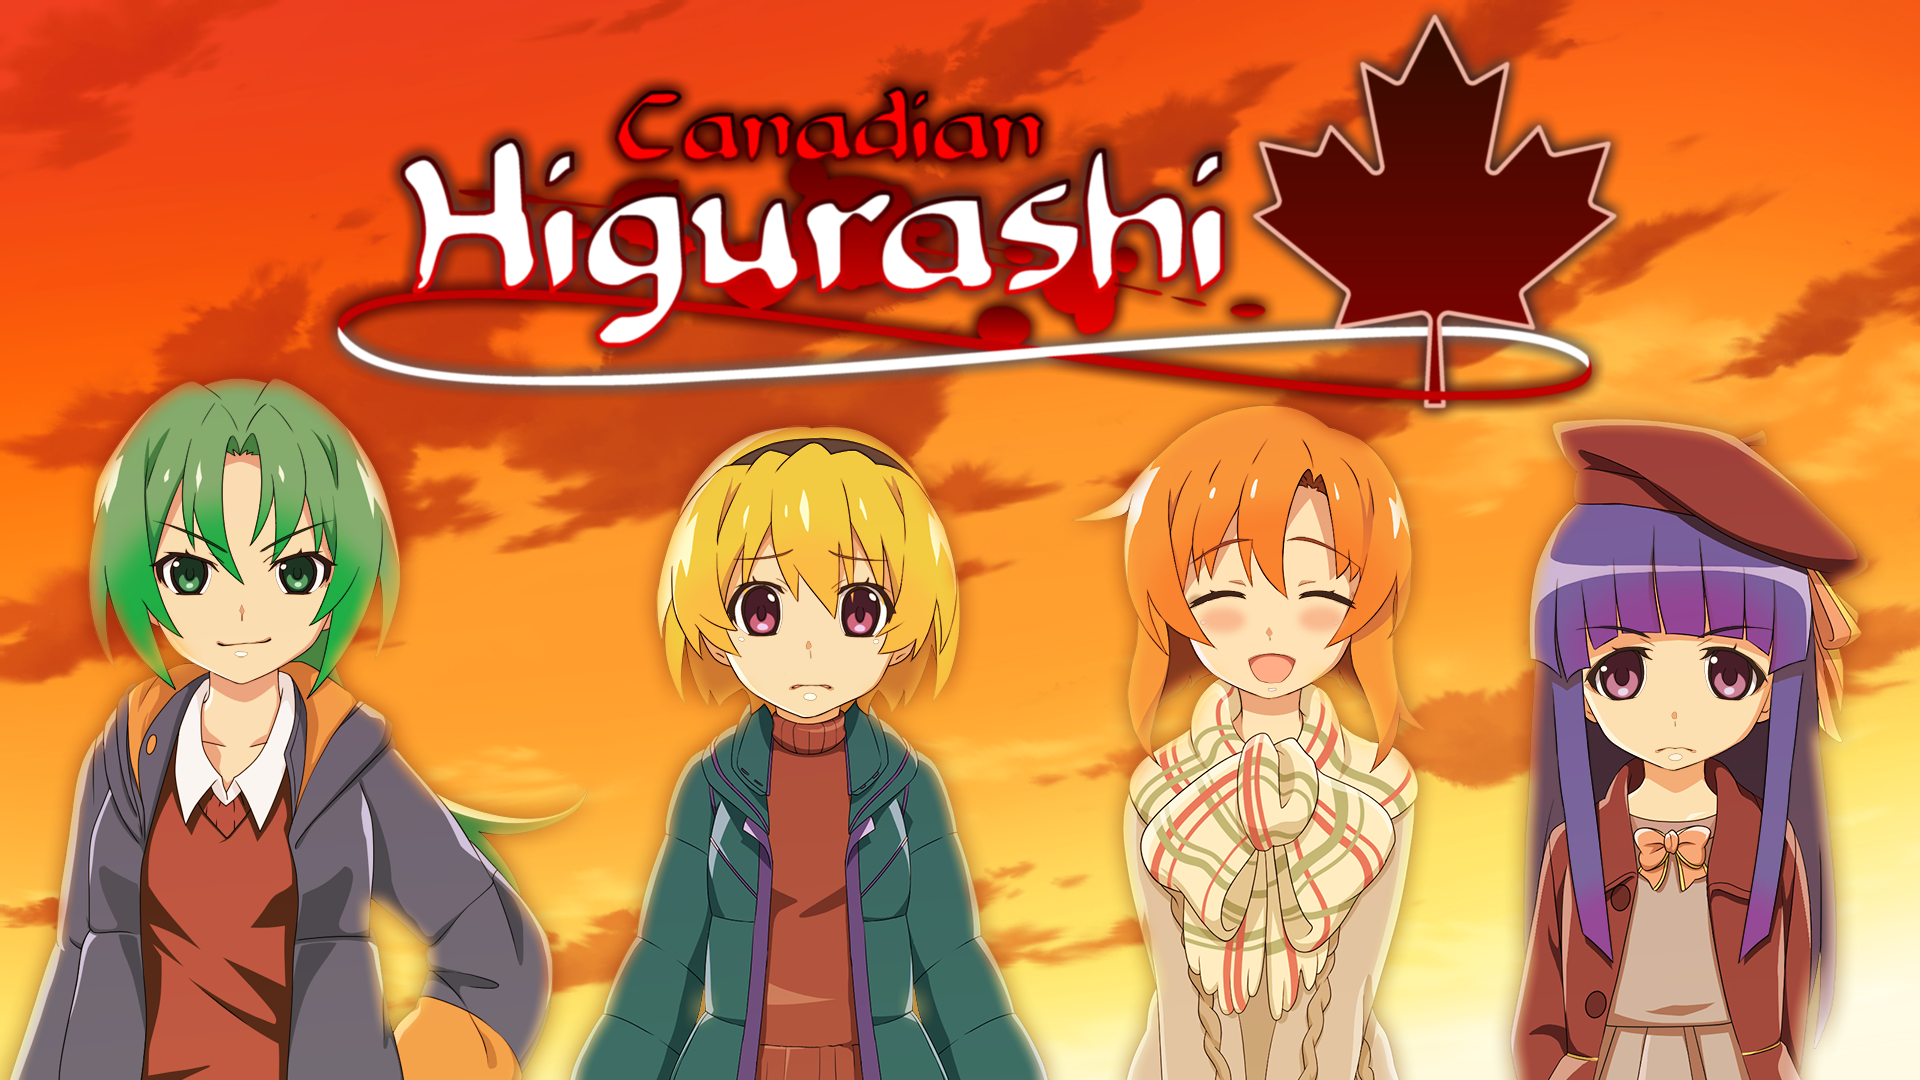 Canadian Higurashi